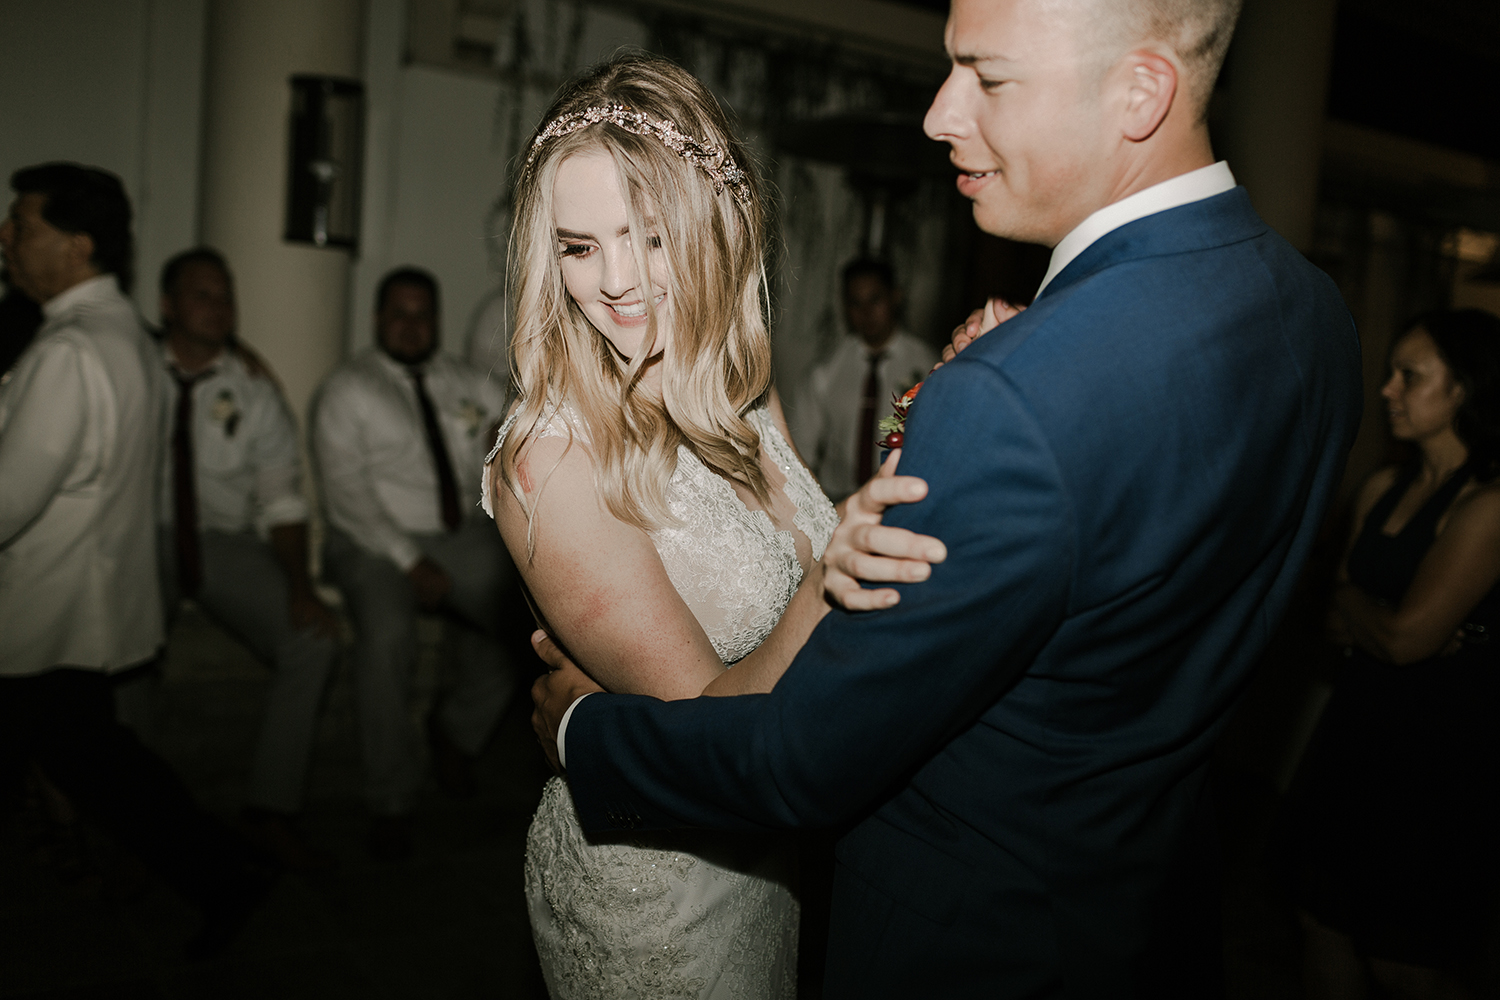 Amanda + Steven Monarch Beach Wedding // Dana Point Wedding // Lucky Day Events Co. // Morgan Hydinger Photography